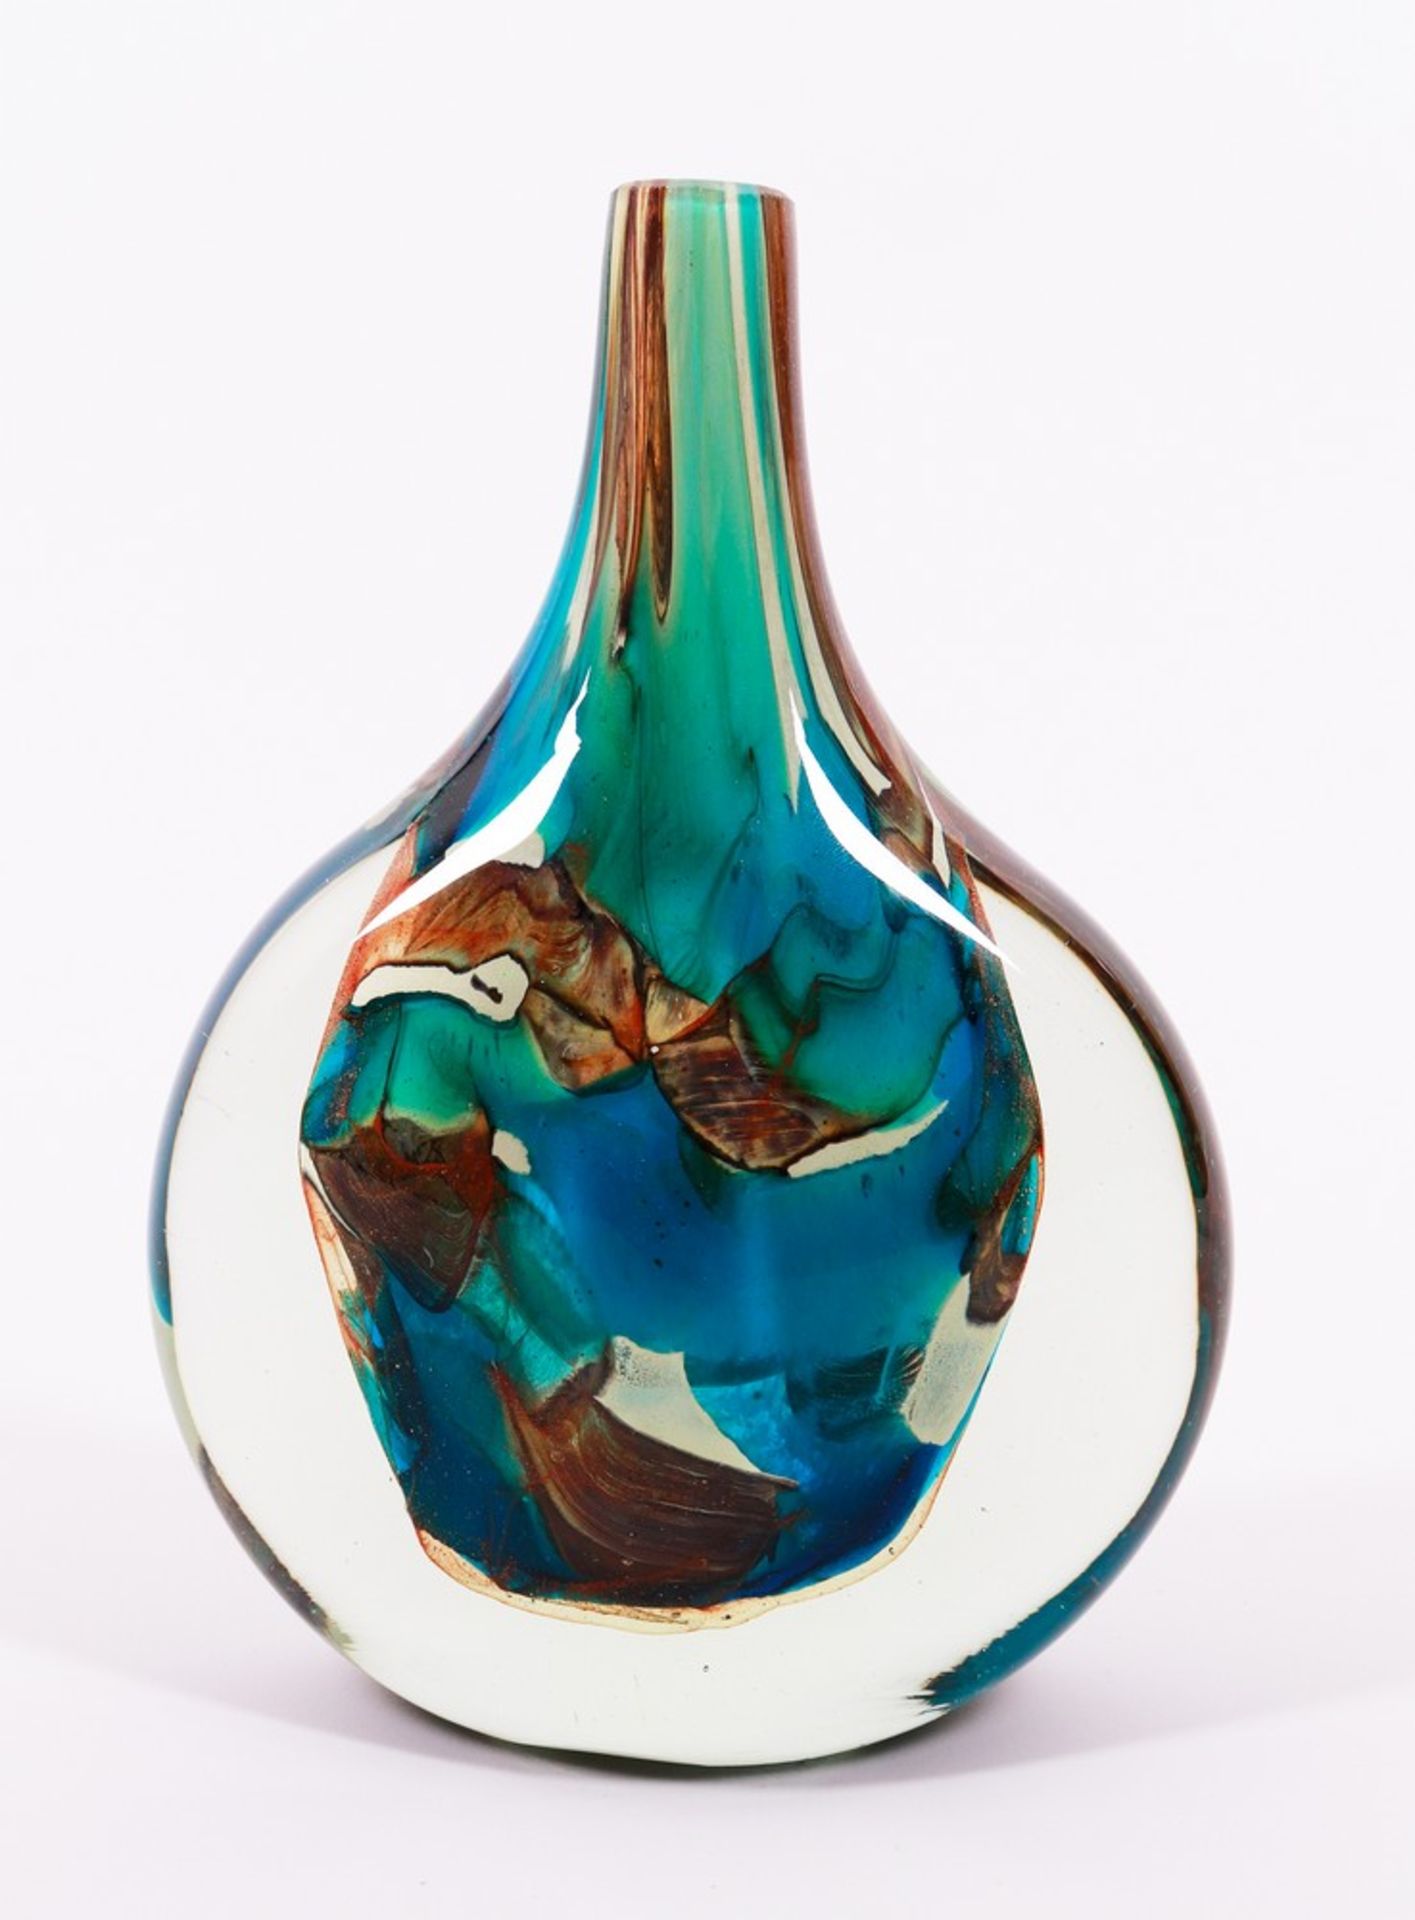 Studio glass vase, design Michael Harris, manufactured by Mdina, Malta, 1980s - Image 2 of 5